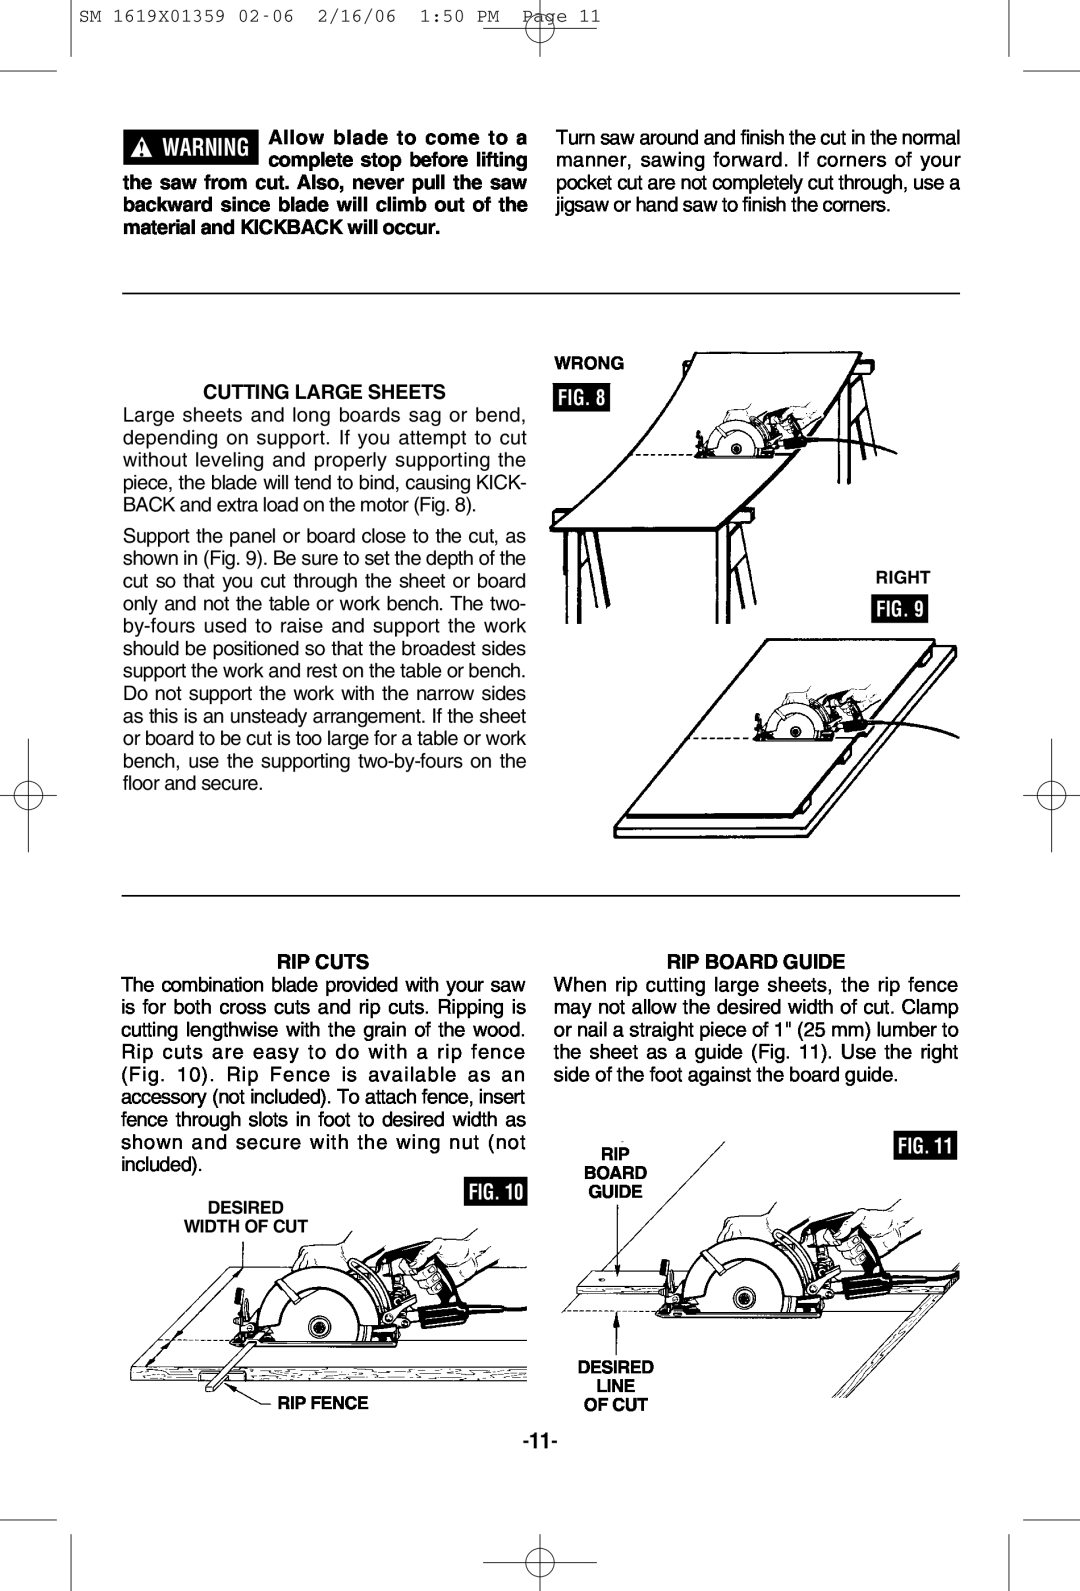 Skil HD5860 manual Cutting Large Sheets, Rip Cuts, Rip Board Guide 